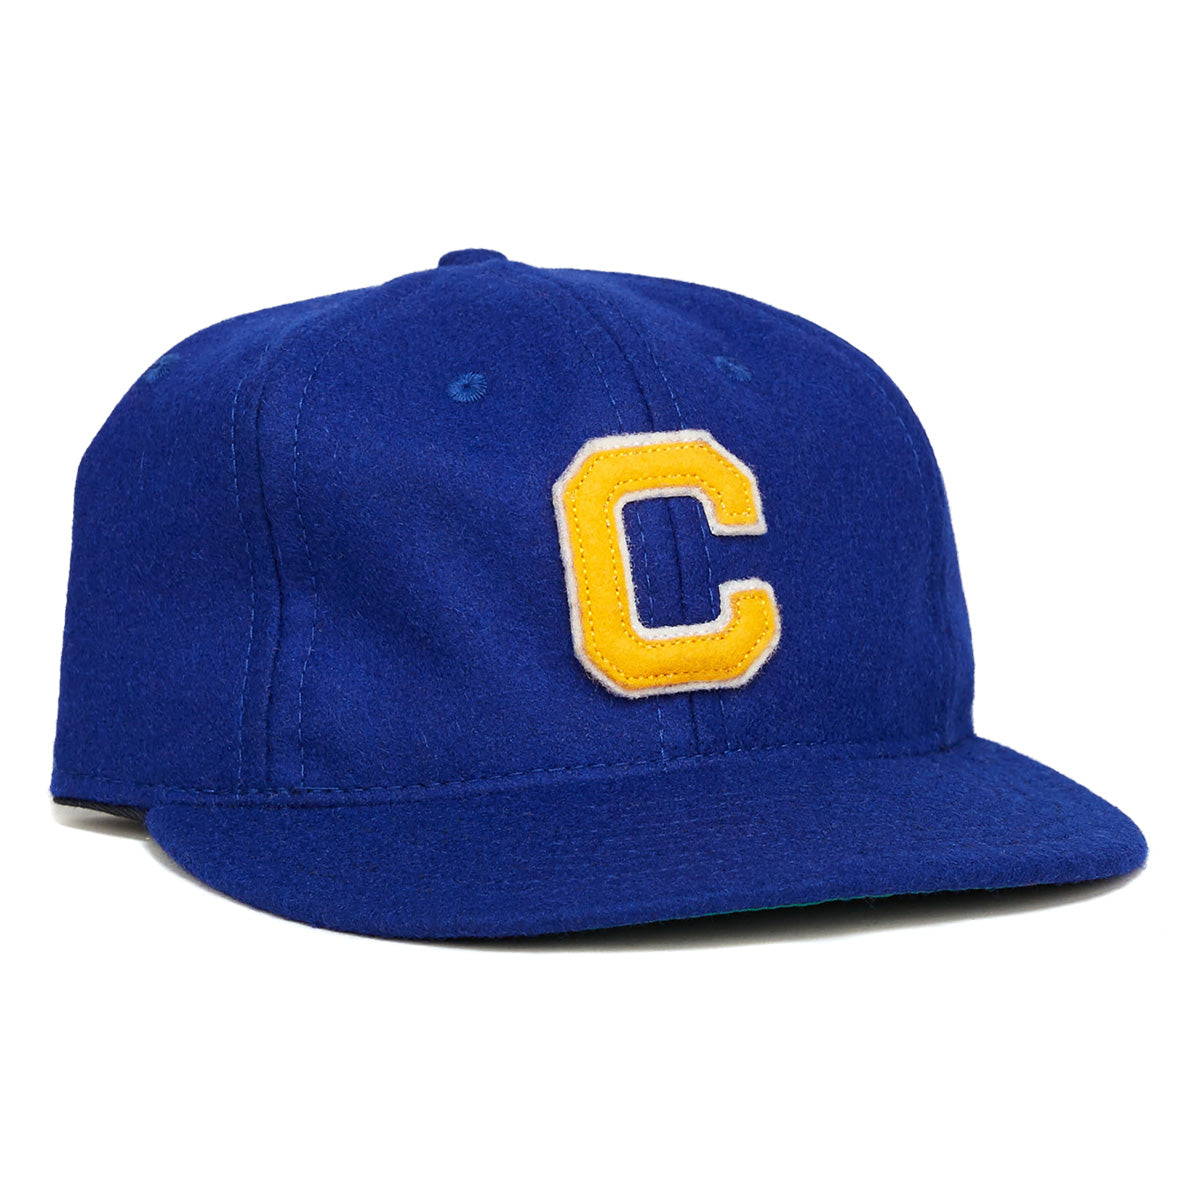 UCLA 1939 Vintage Ballcap